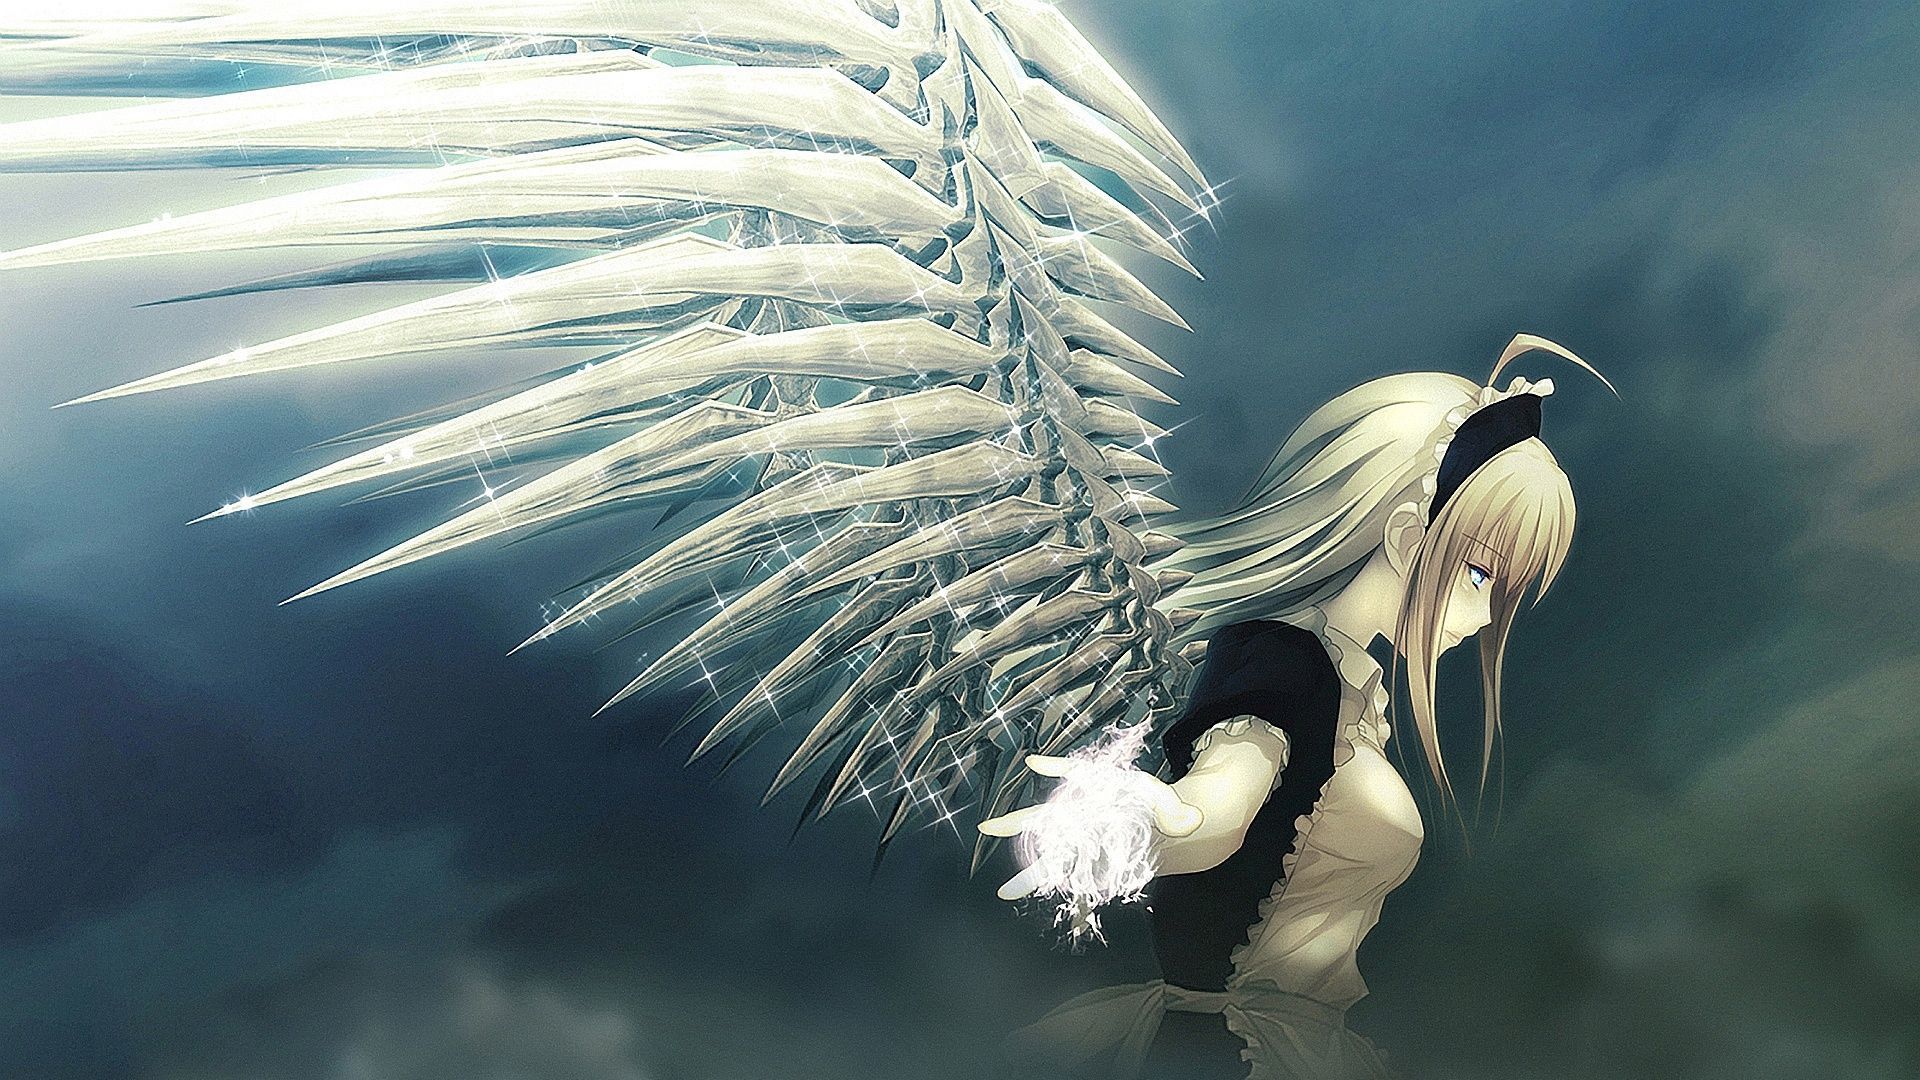 Anime angel magic wallpaper HD. Wallpaper, Background, Image